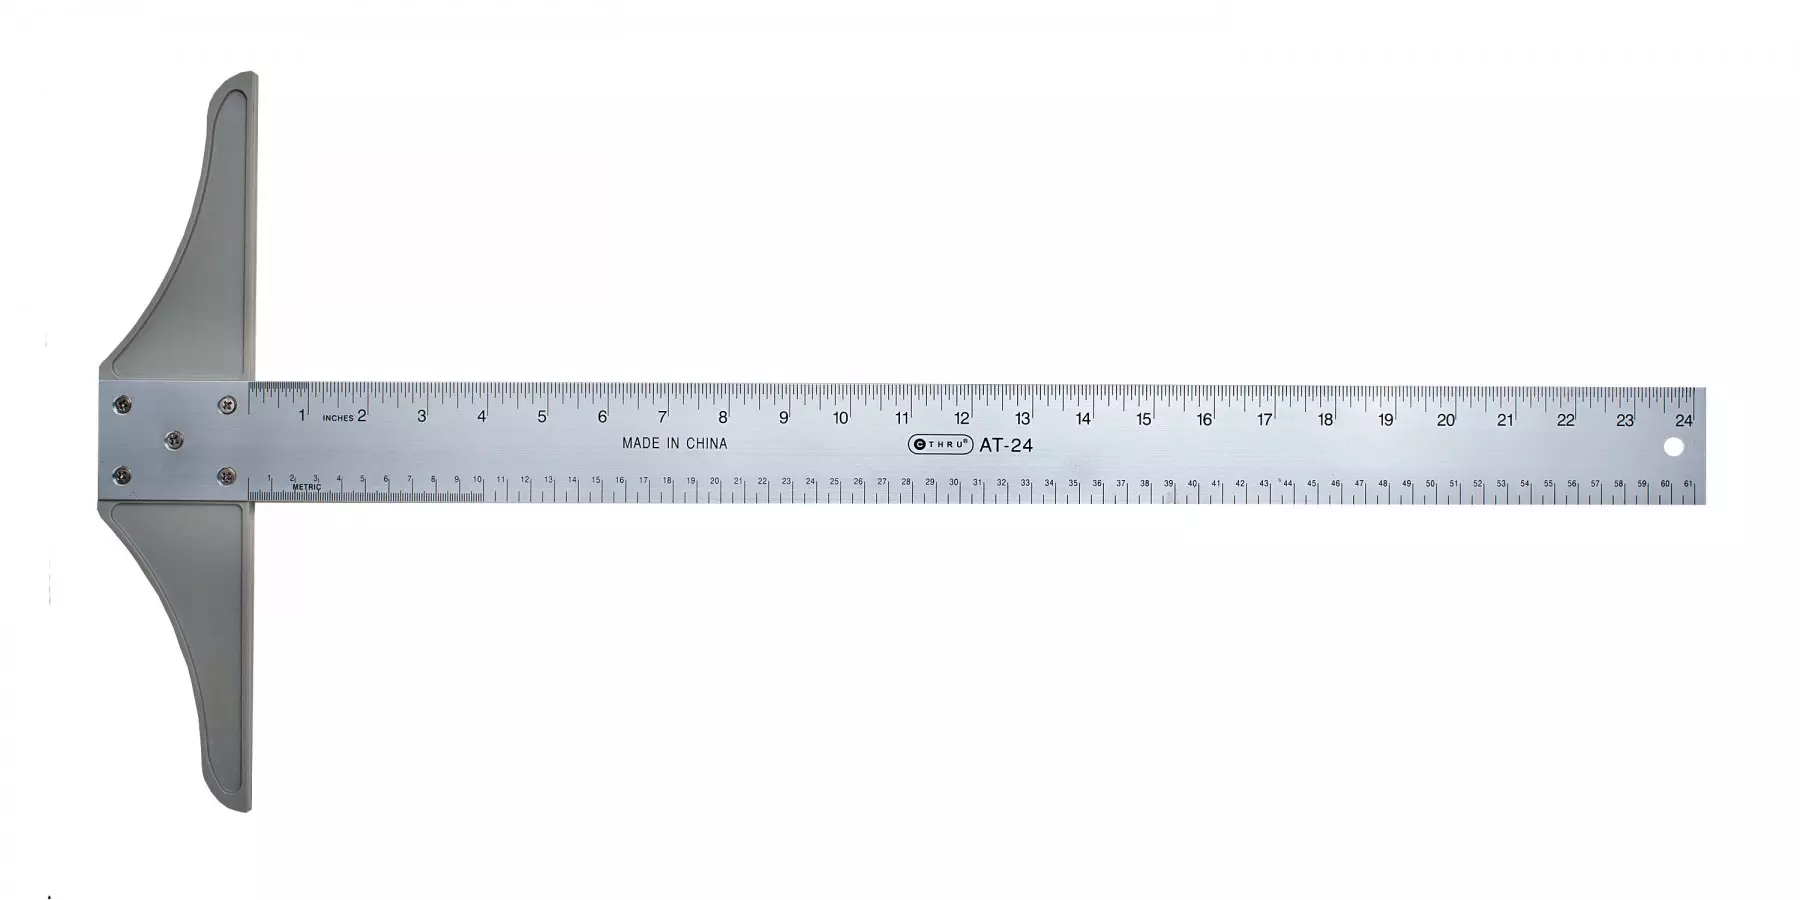 Levoite™ Precision T-Square Ruler for Woodworking — levoite